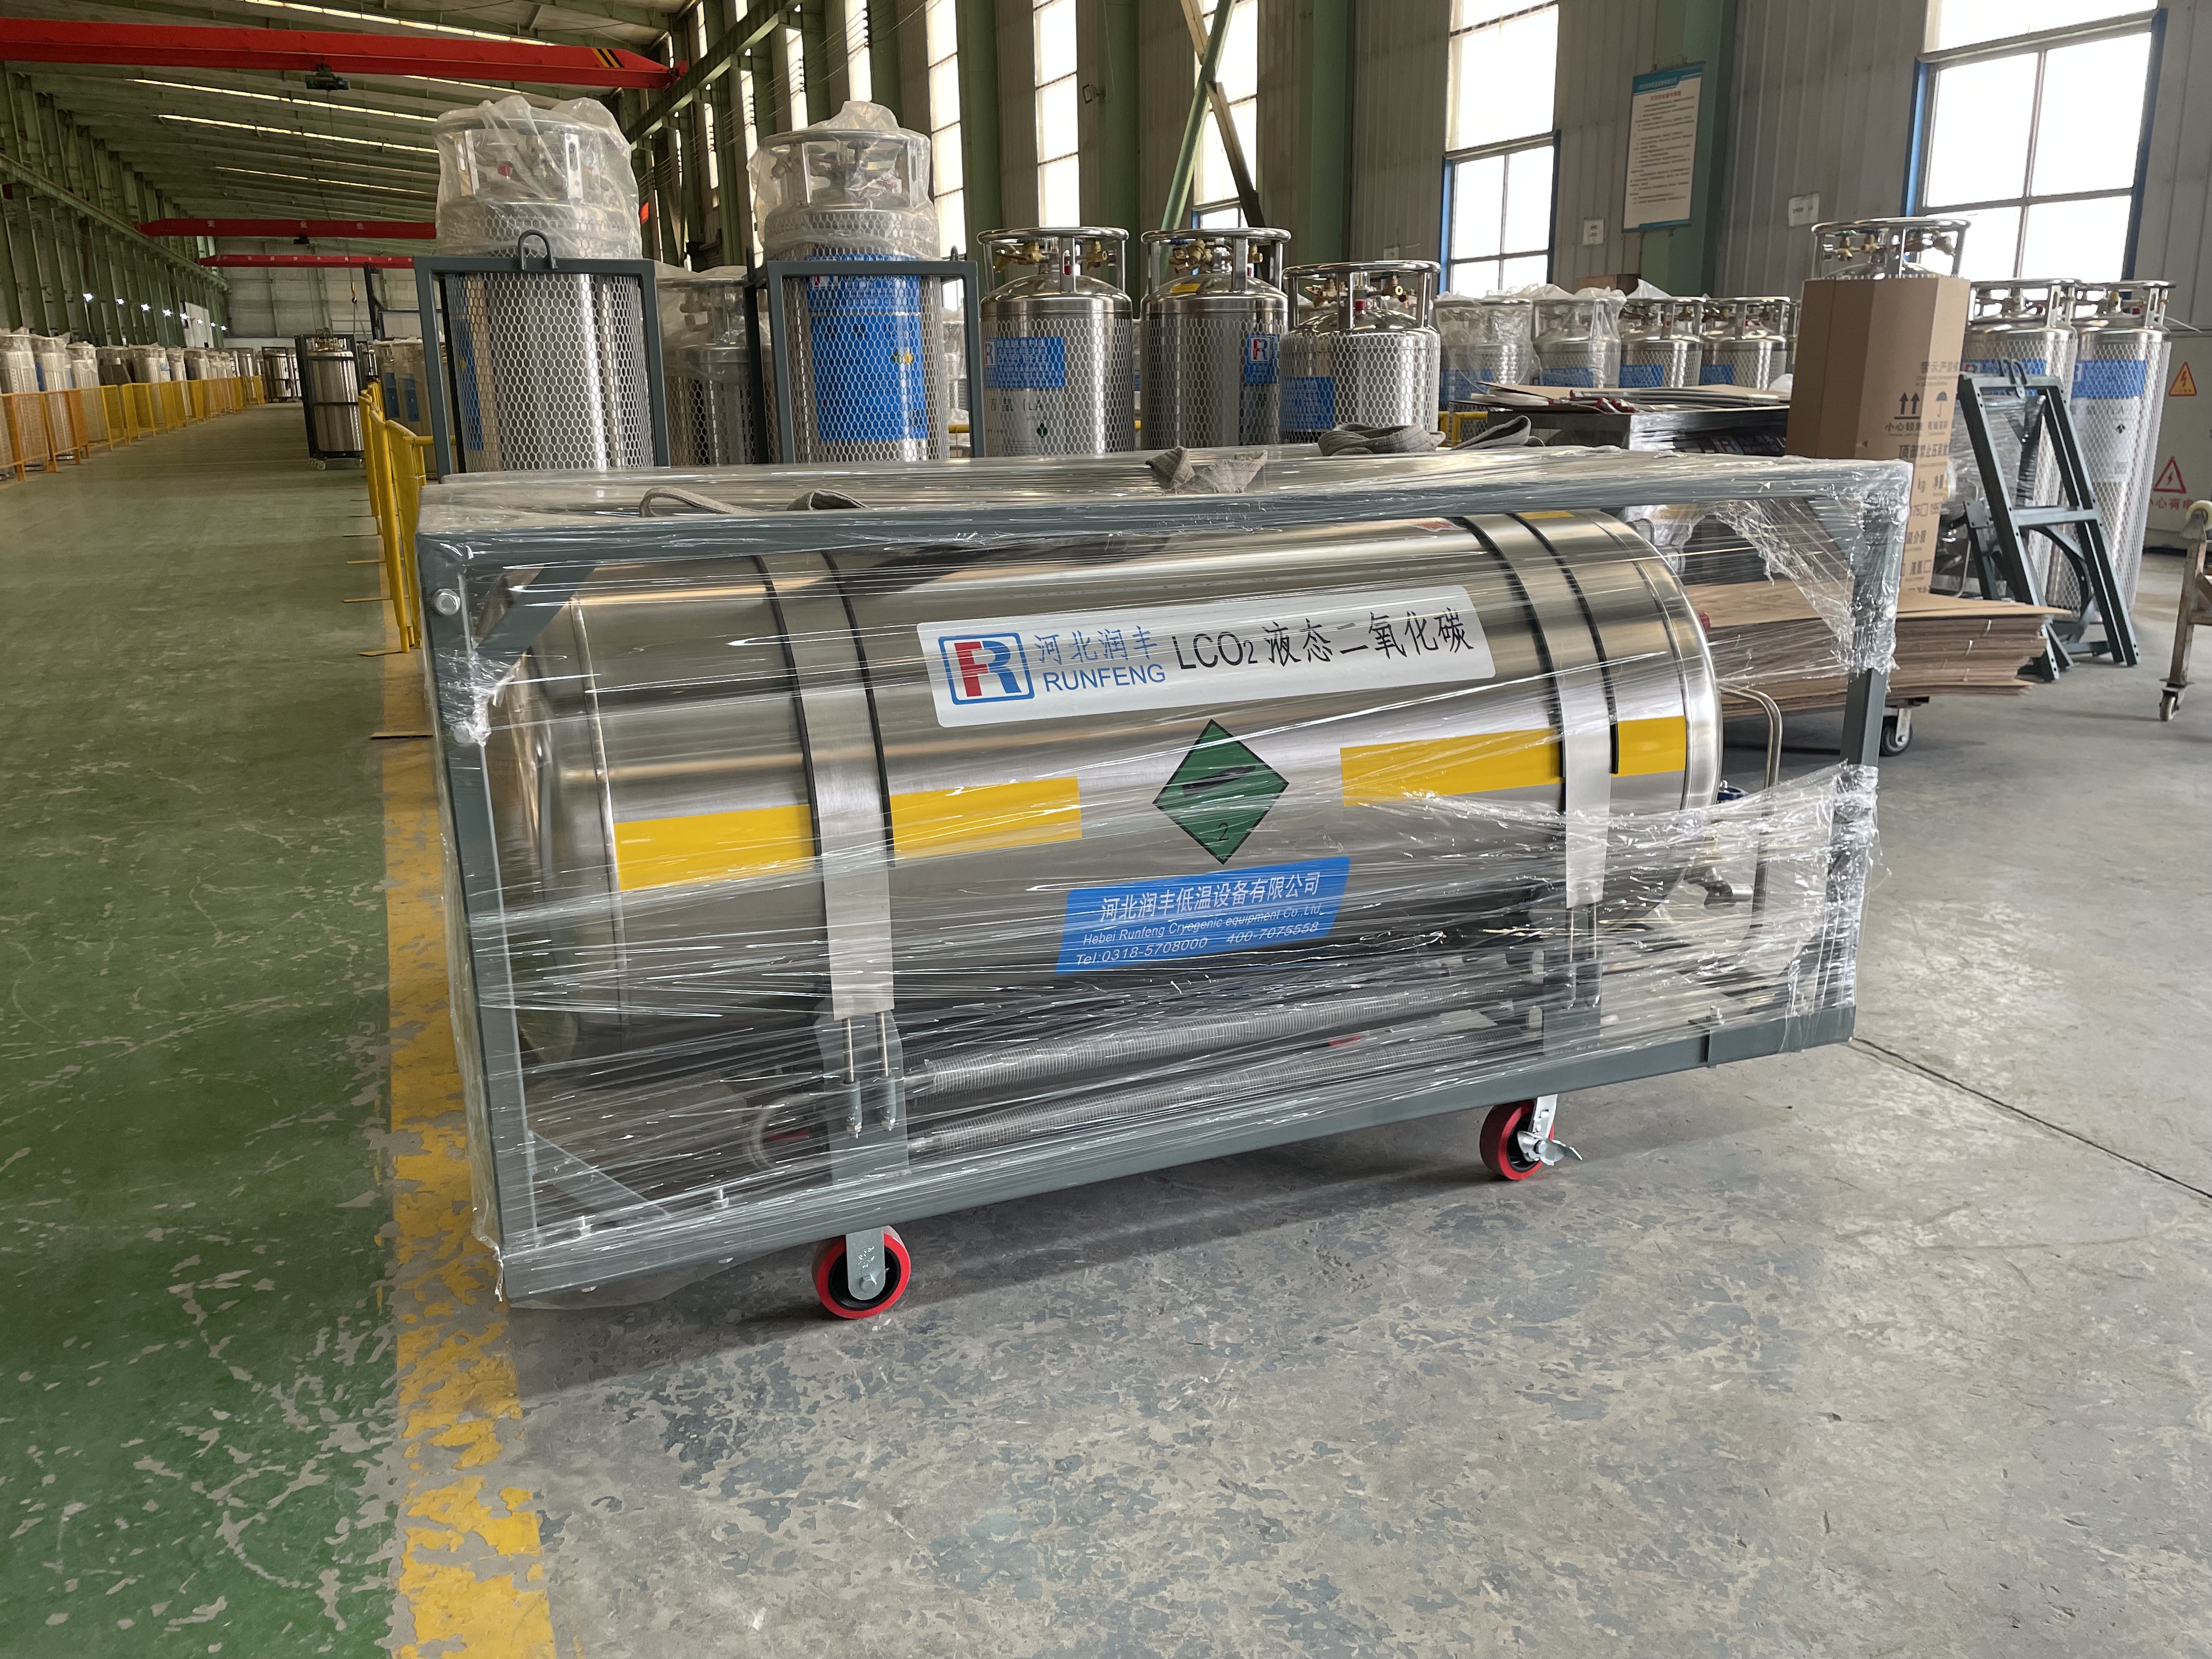 Hot New Products Liquid Oxygen Dewar - Liquid Carbon Dioxide Bottle – Runfeng